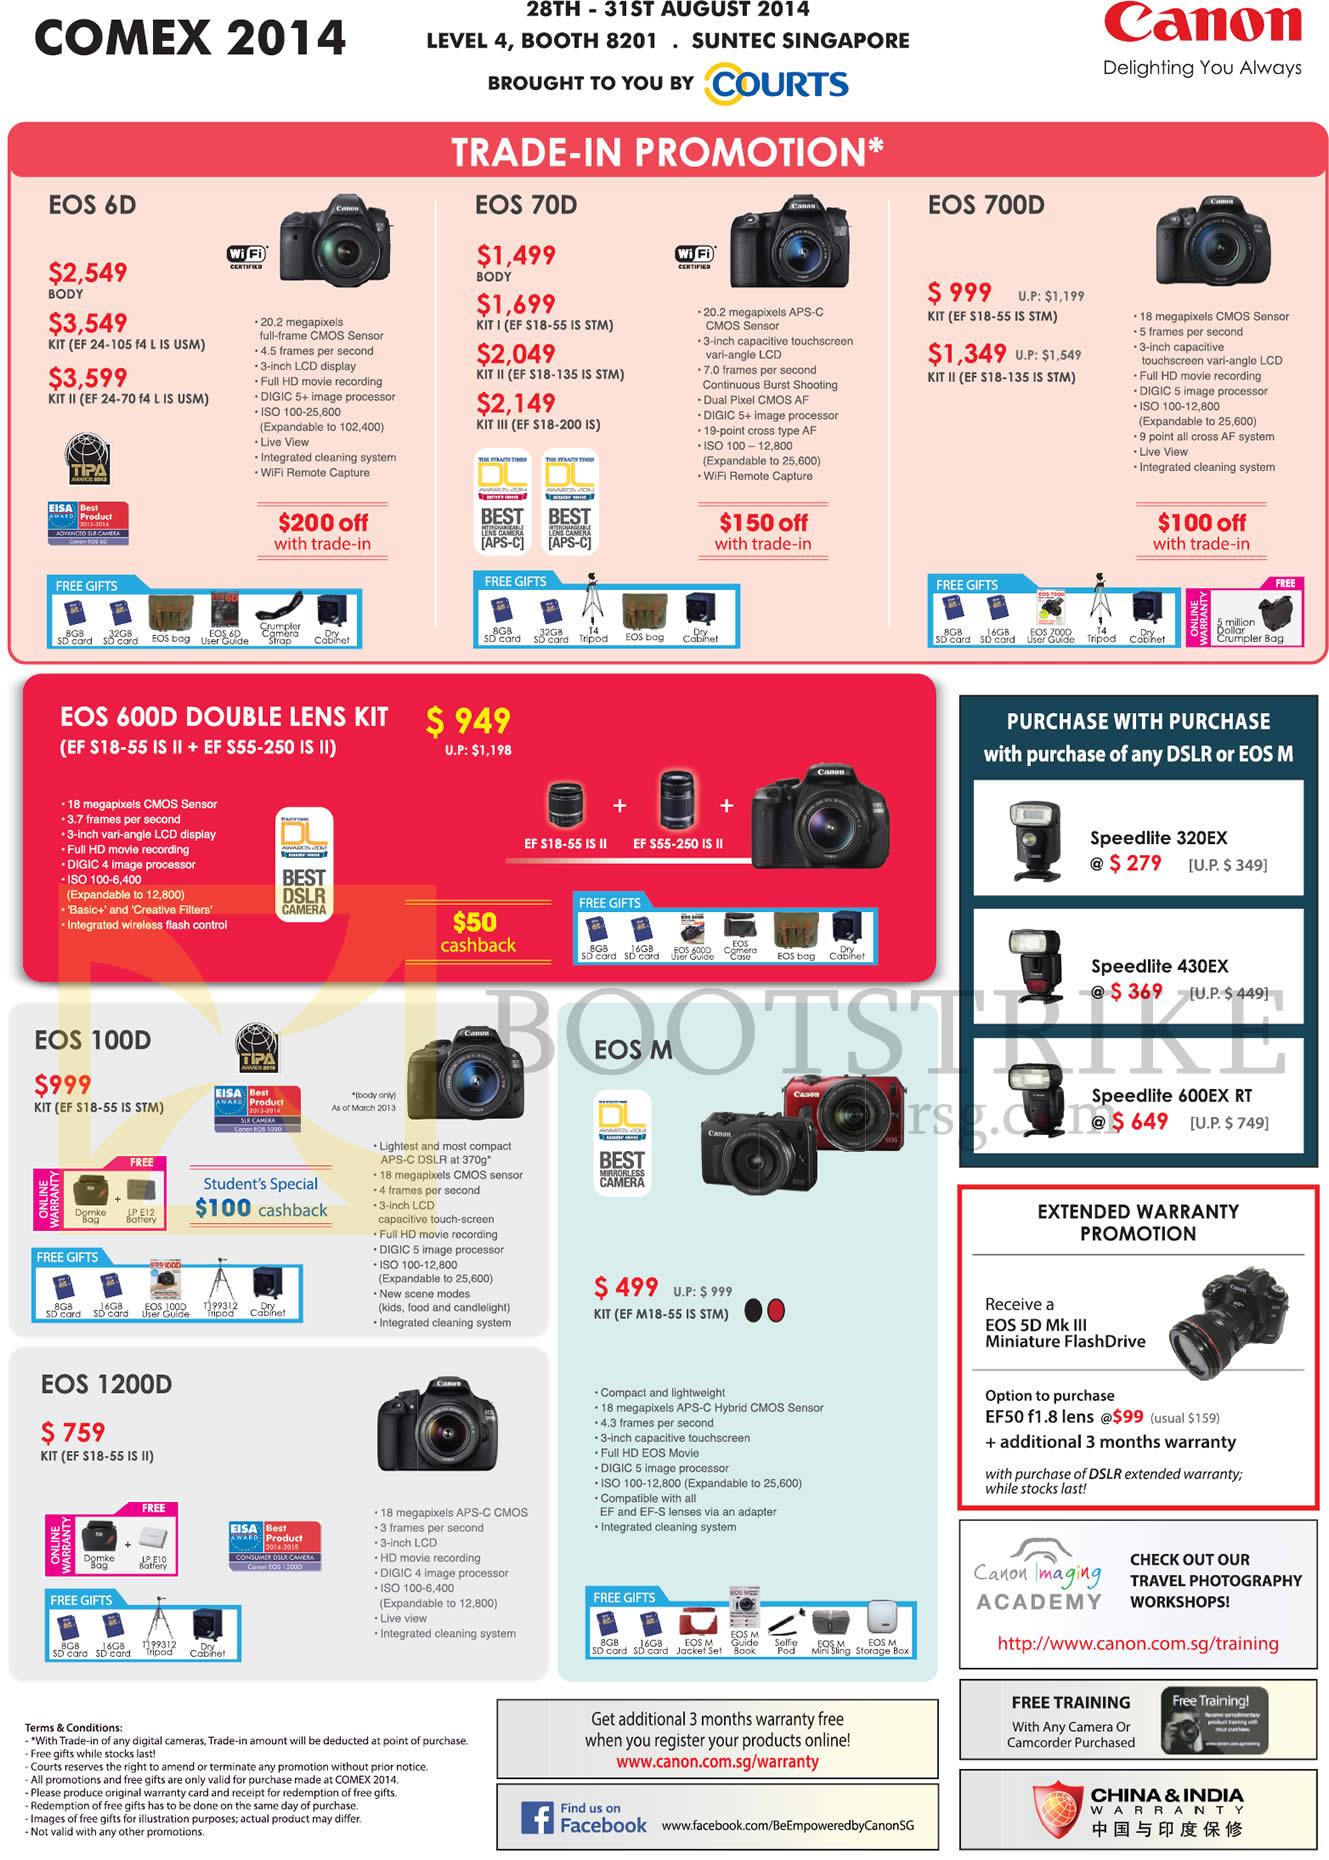 COMEX 2014 price list image brochure of Canon Digital Cameras DSLR EOS 6D, EOS 70D, EOS 700D, EOS 600D, EOS 100D, EOS 1200D, EOS M